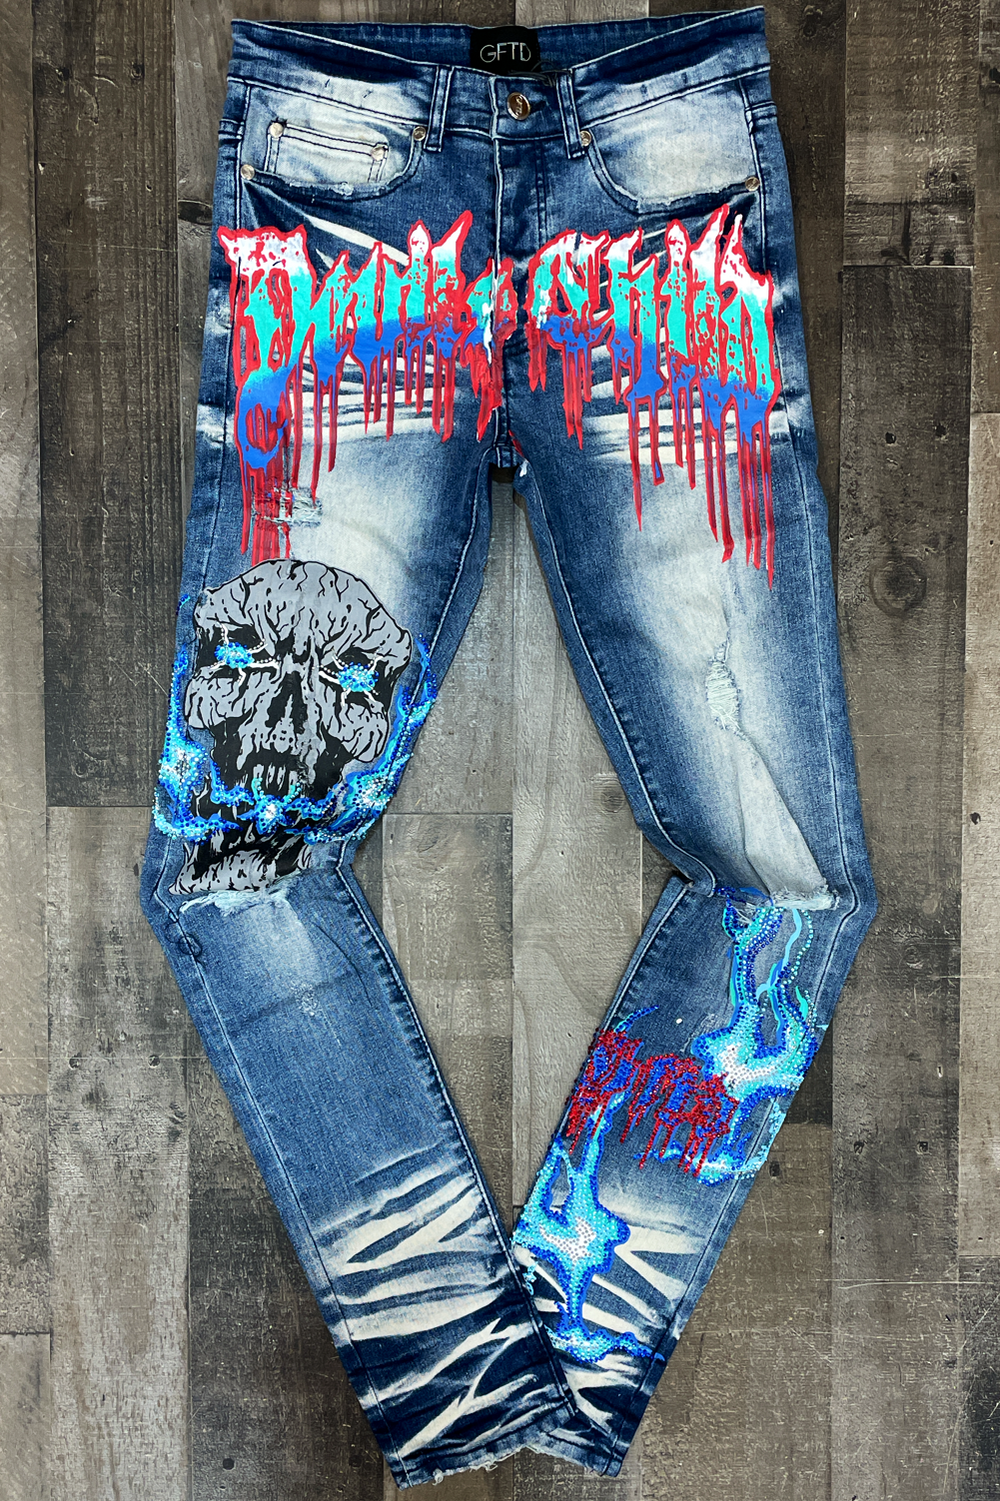 GFTD- electro denim jeans